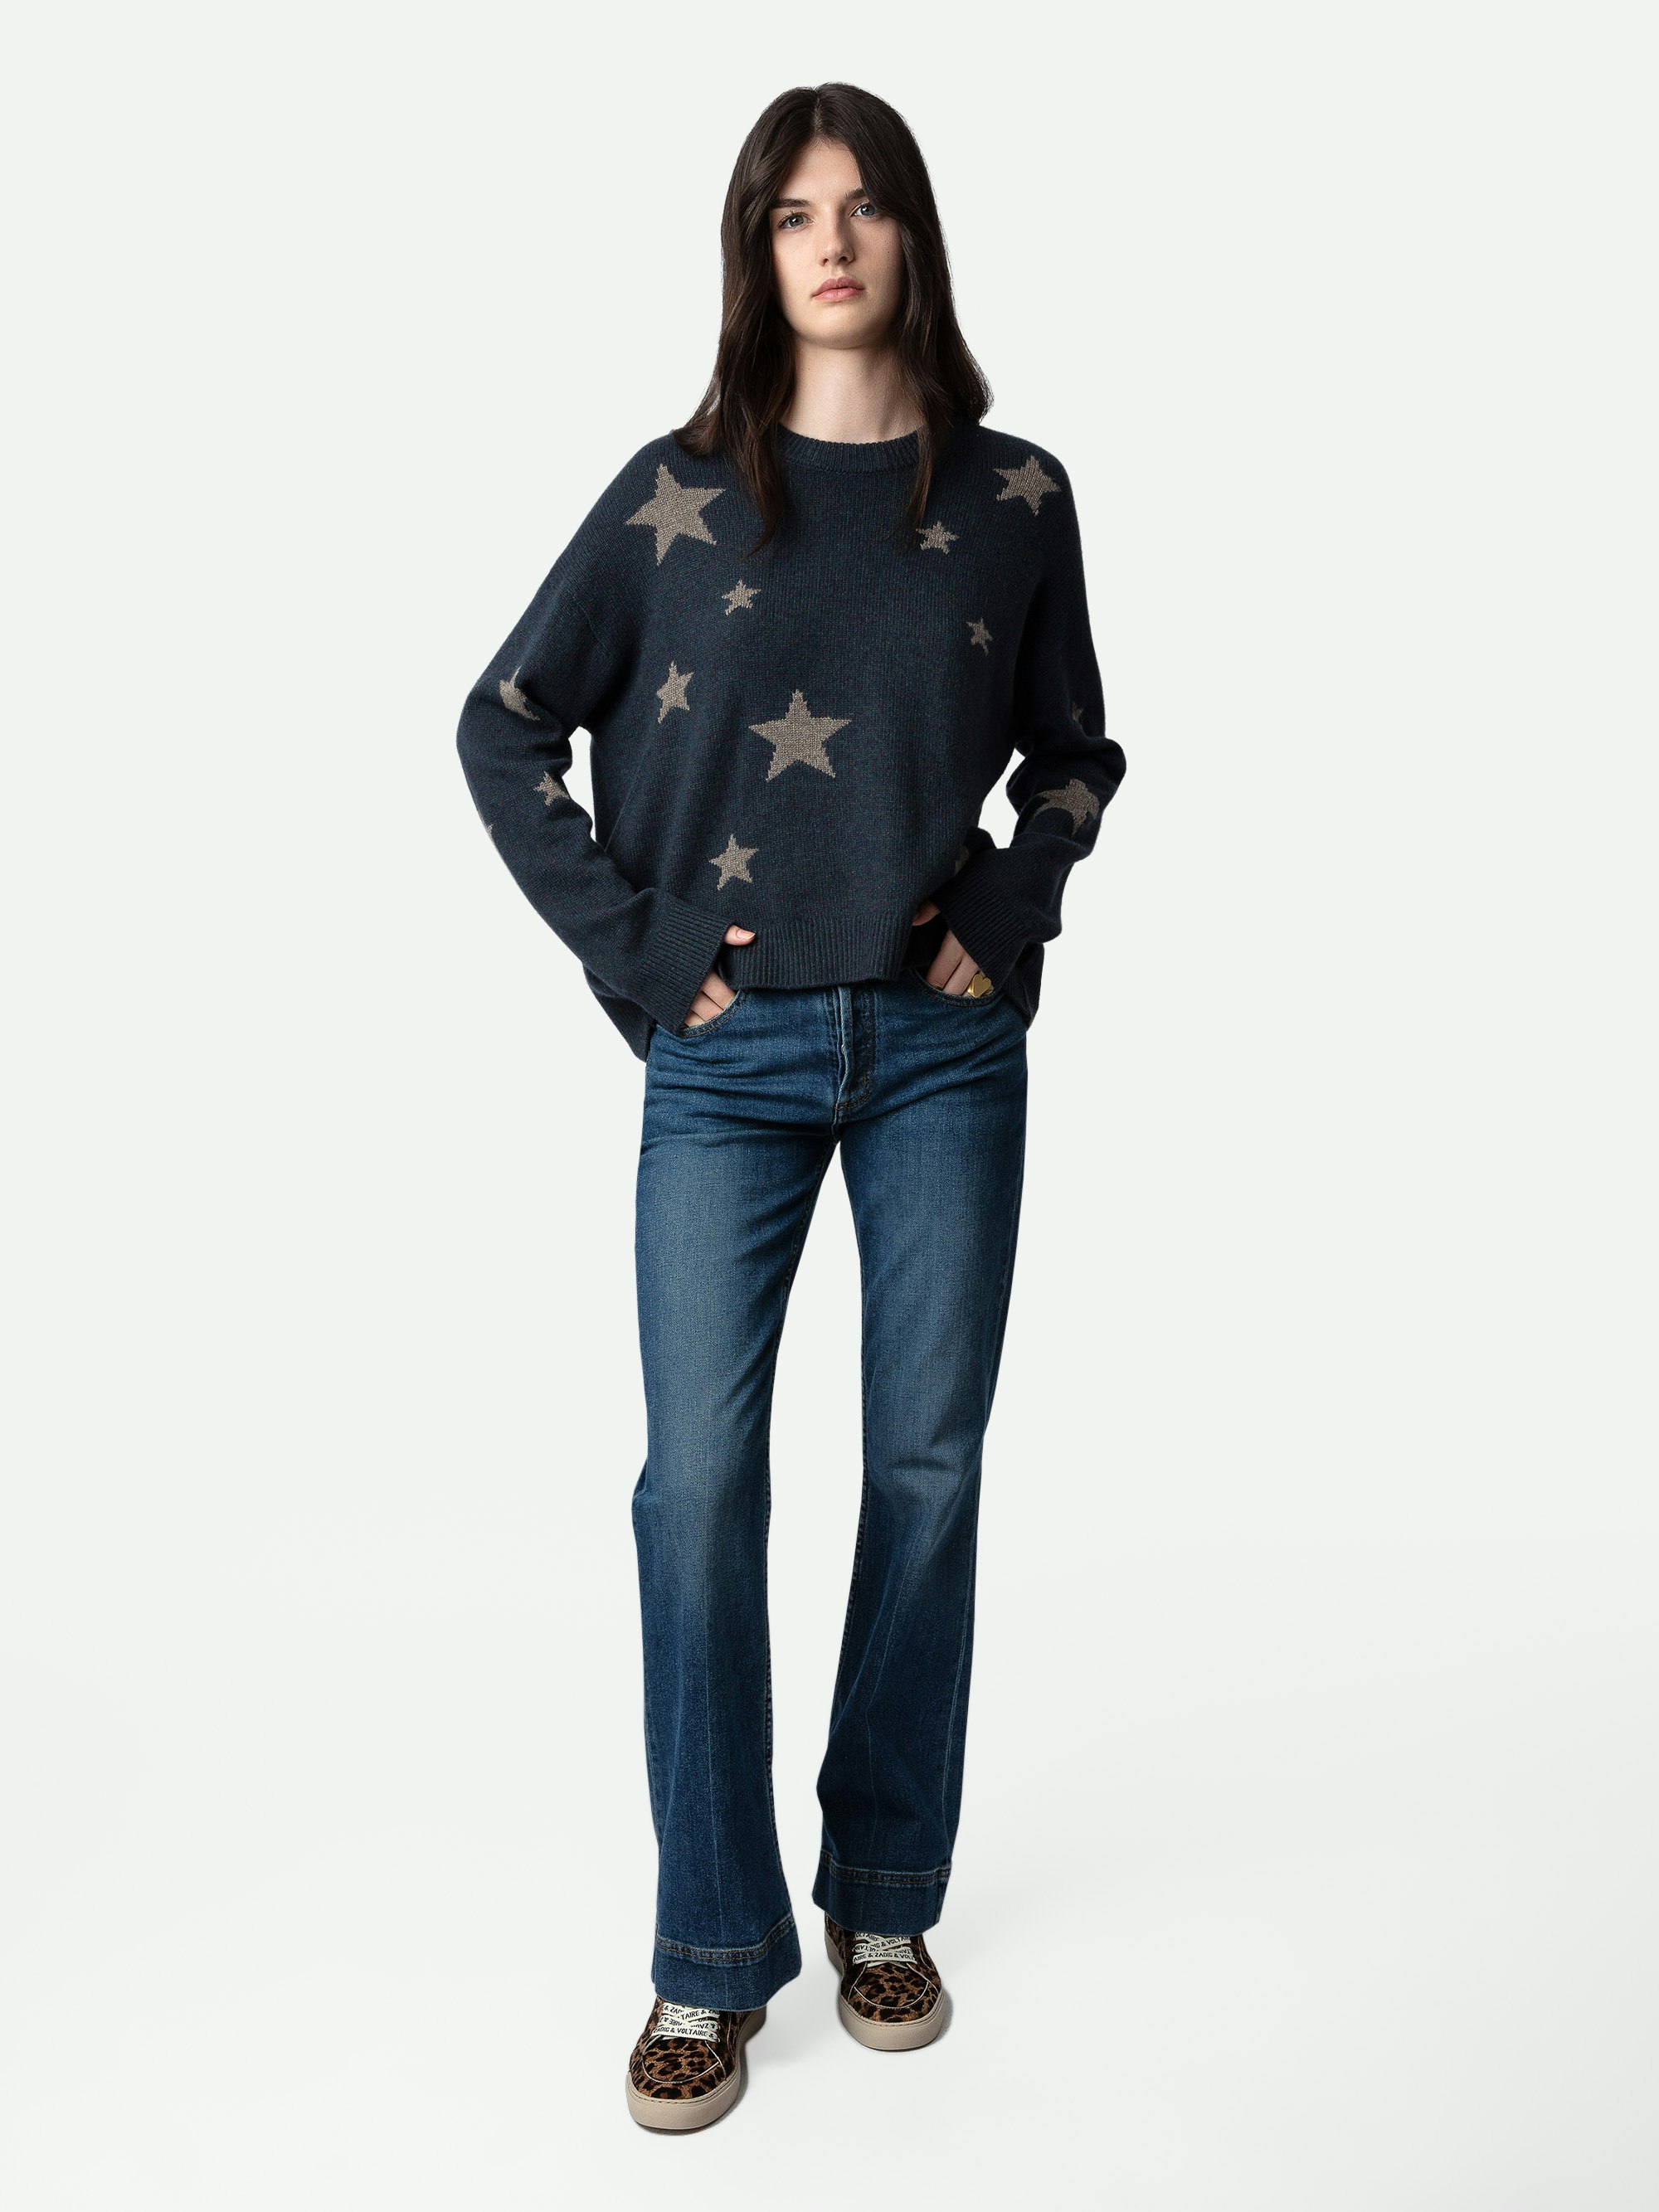 Markus Sweater 100% Cashmere - Women’s dark green 100% cashmere sweater with star-shaped motifs.